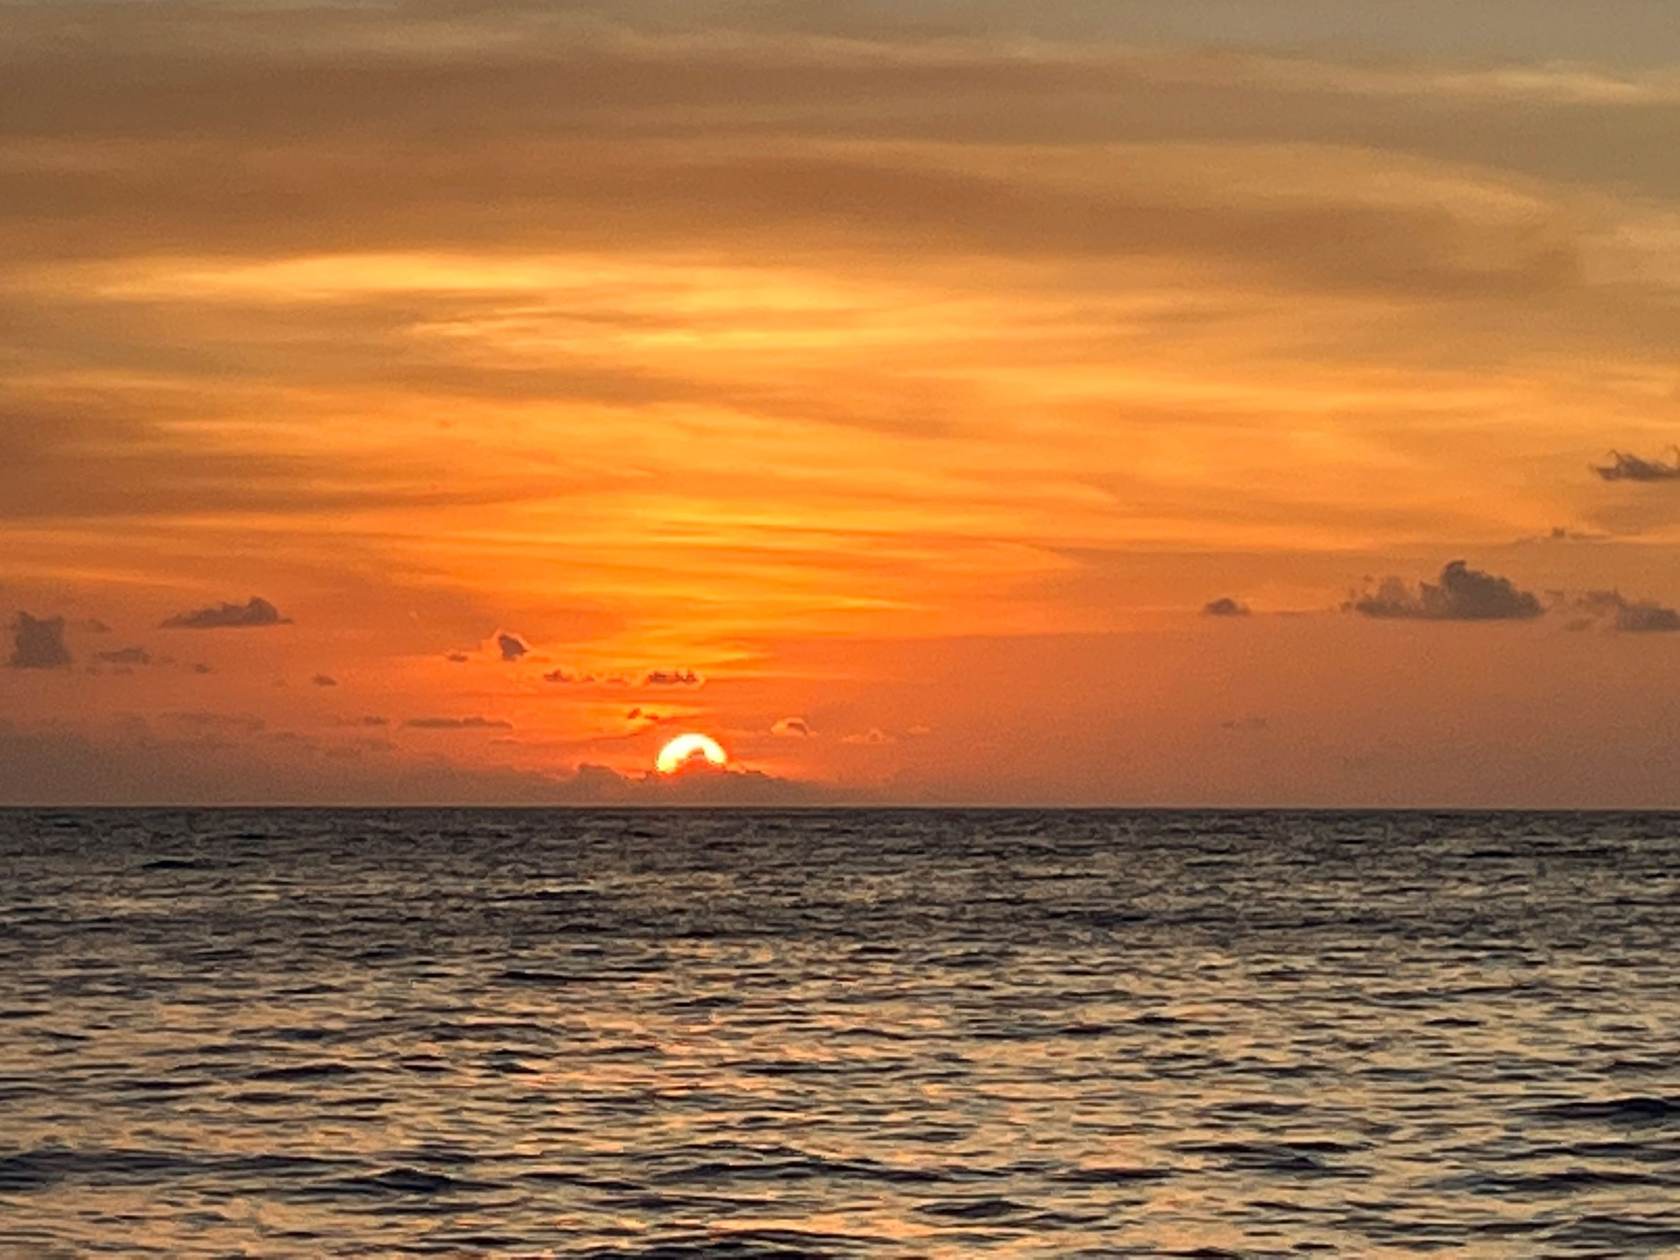 Spektakulärer Sonnenuntergang über dem Meer mit orangenem Himmel